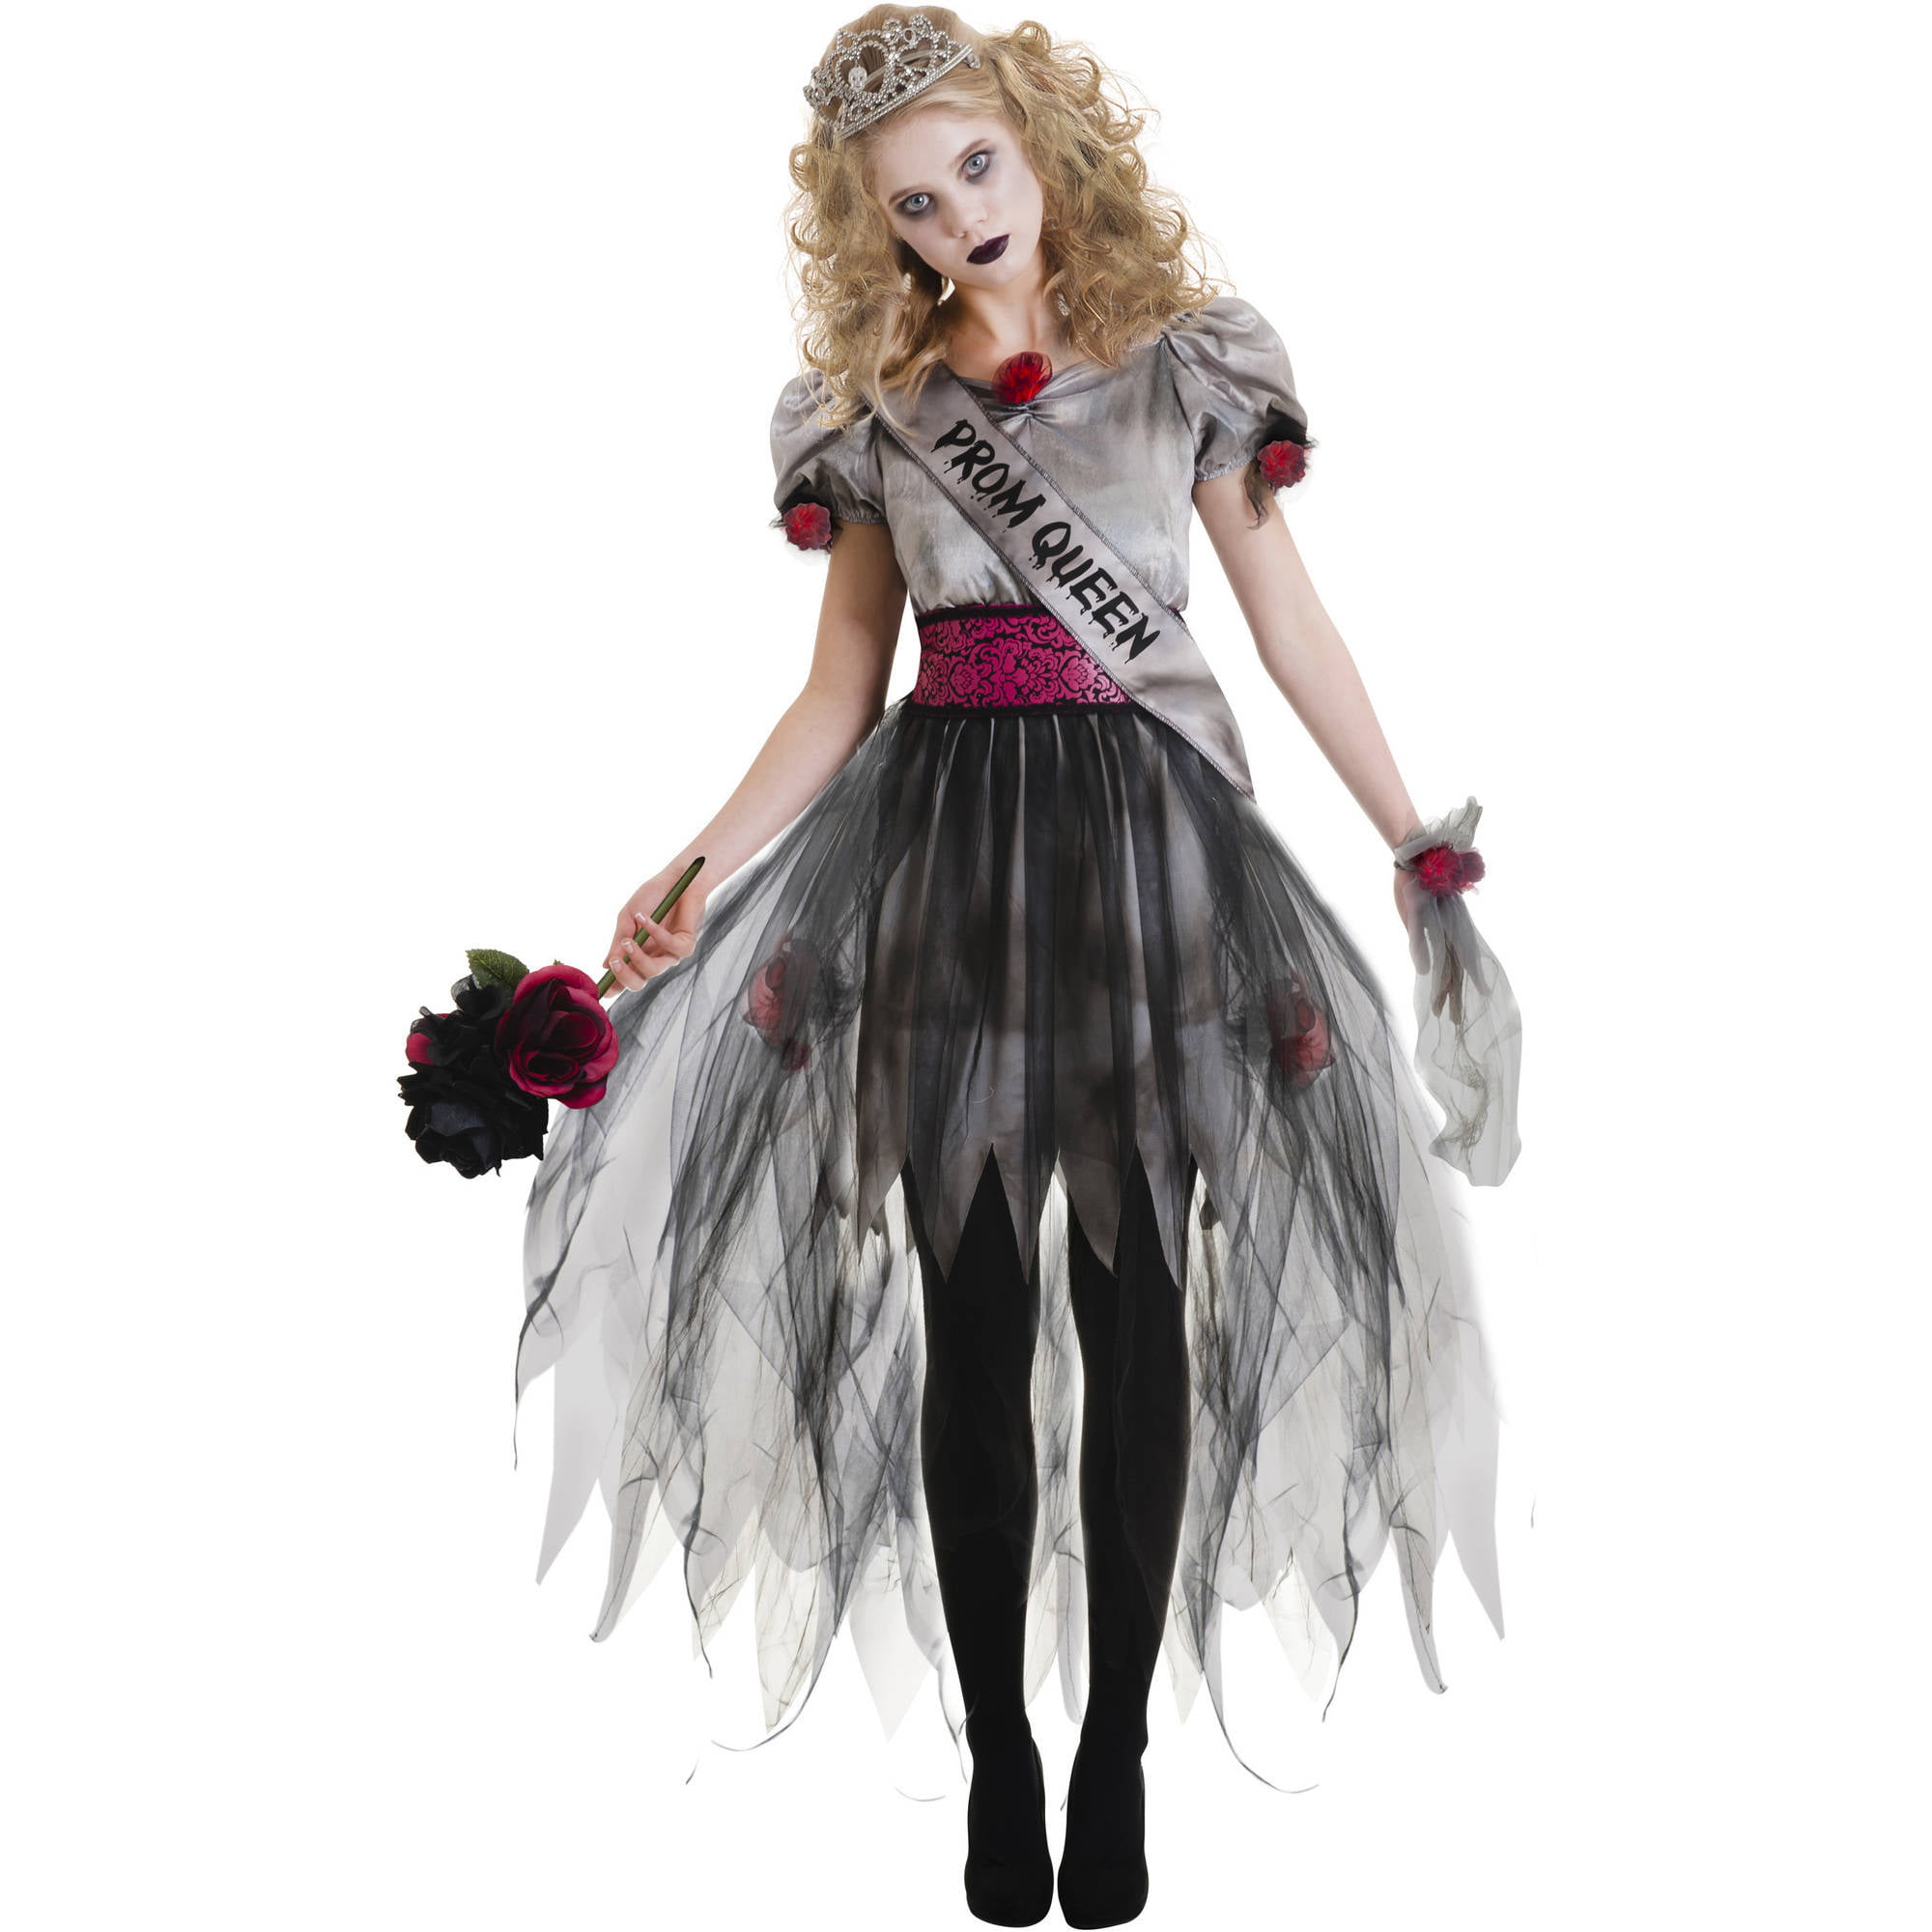 Drop Dead Gorgeous Prom Queen Halloween Deluxe Fancy Dress Costume Adult Wo...